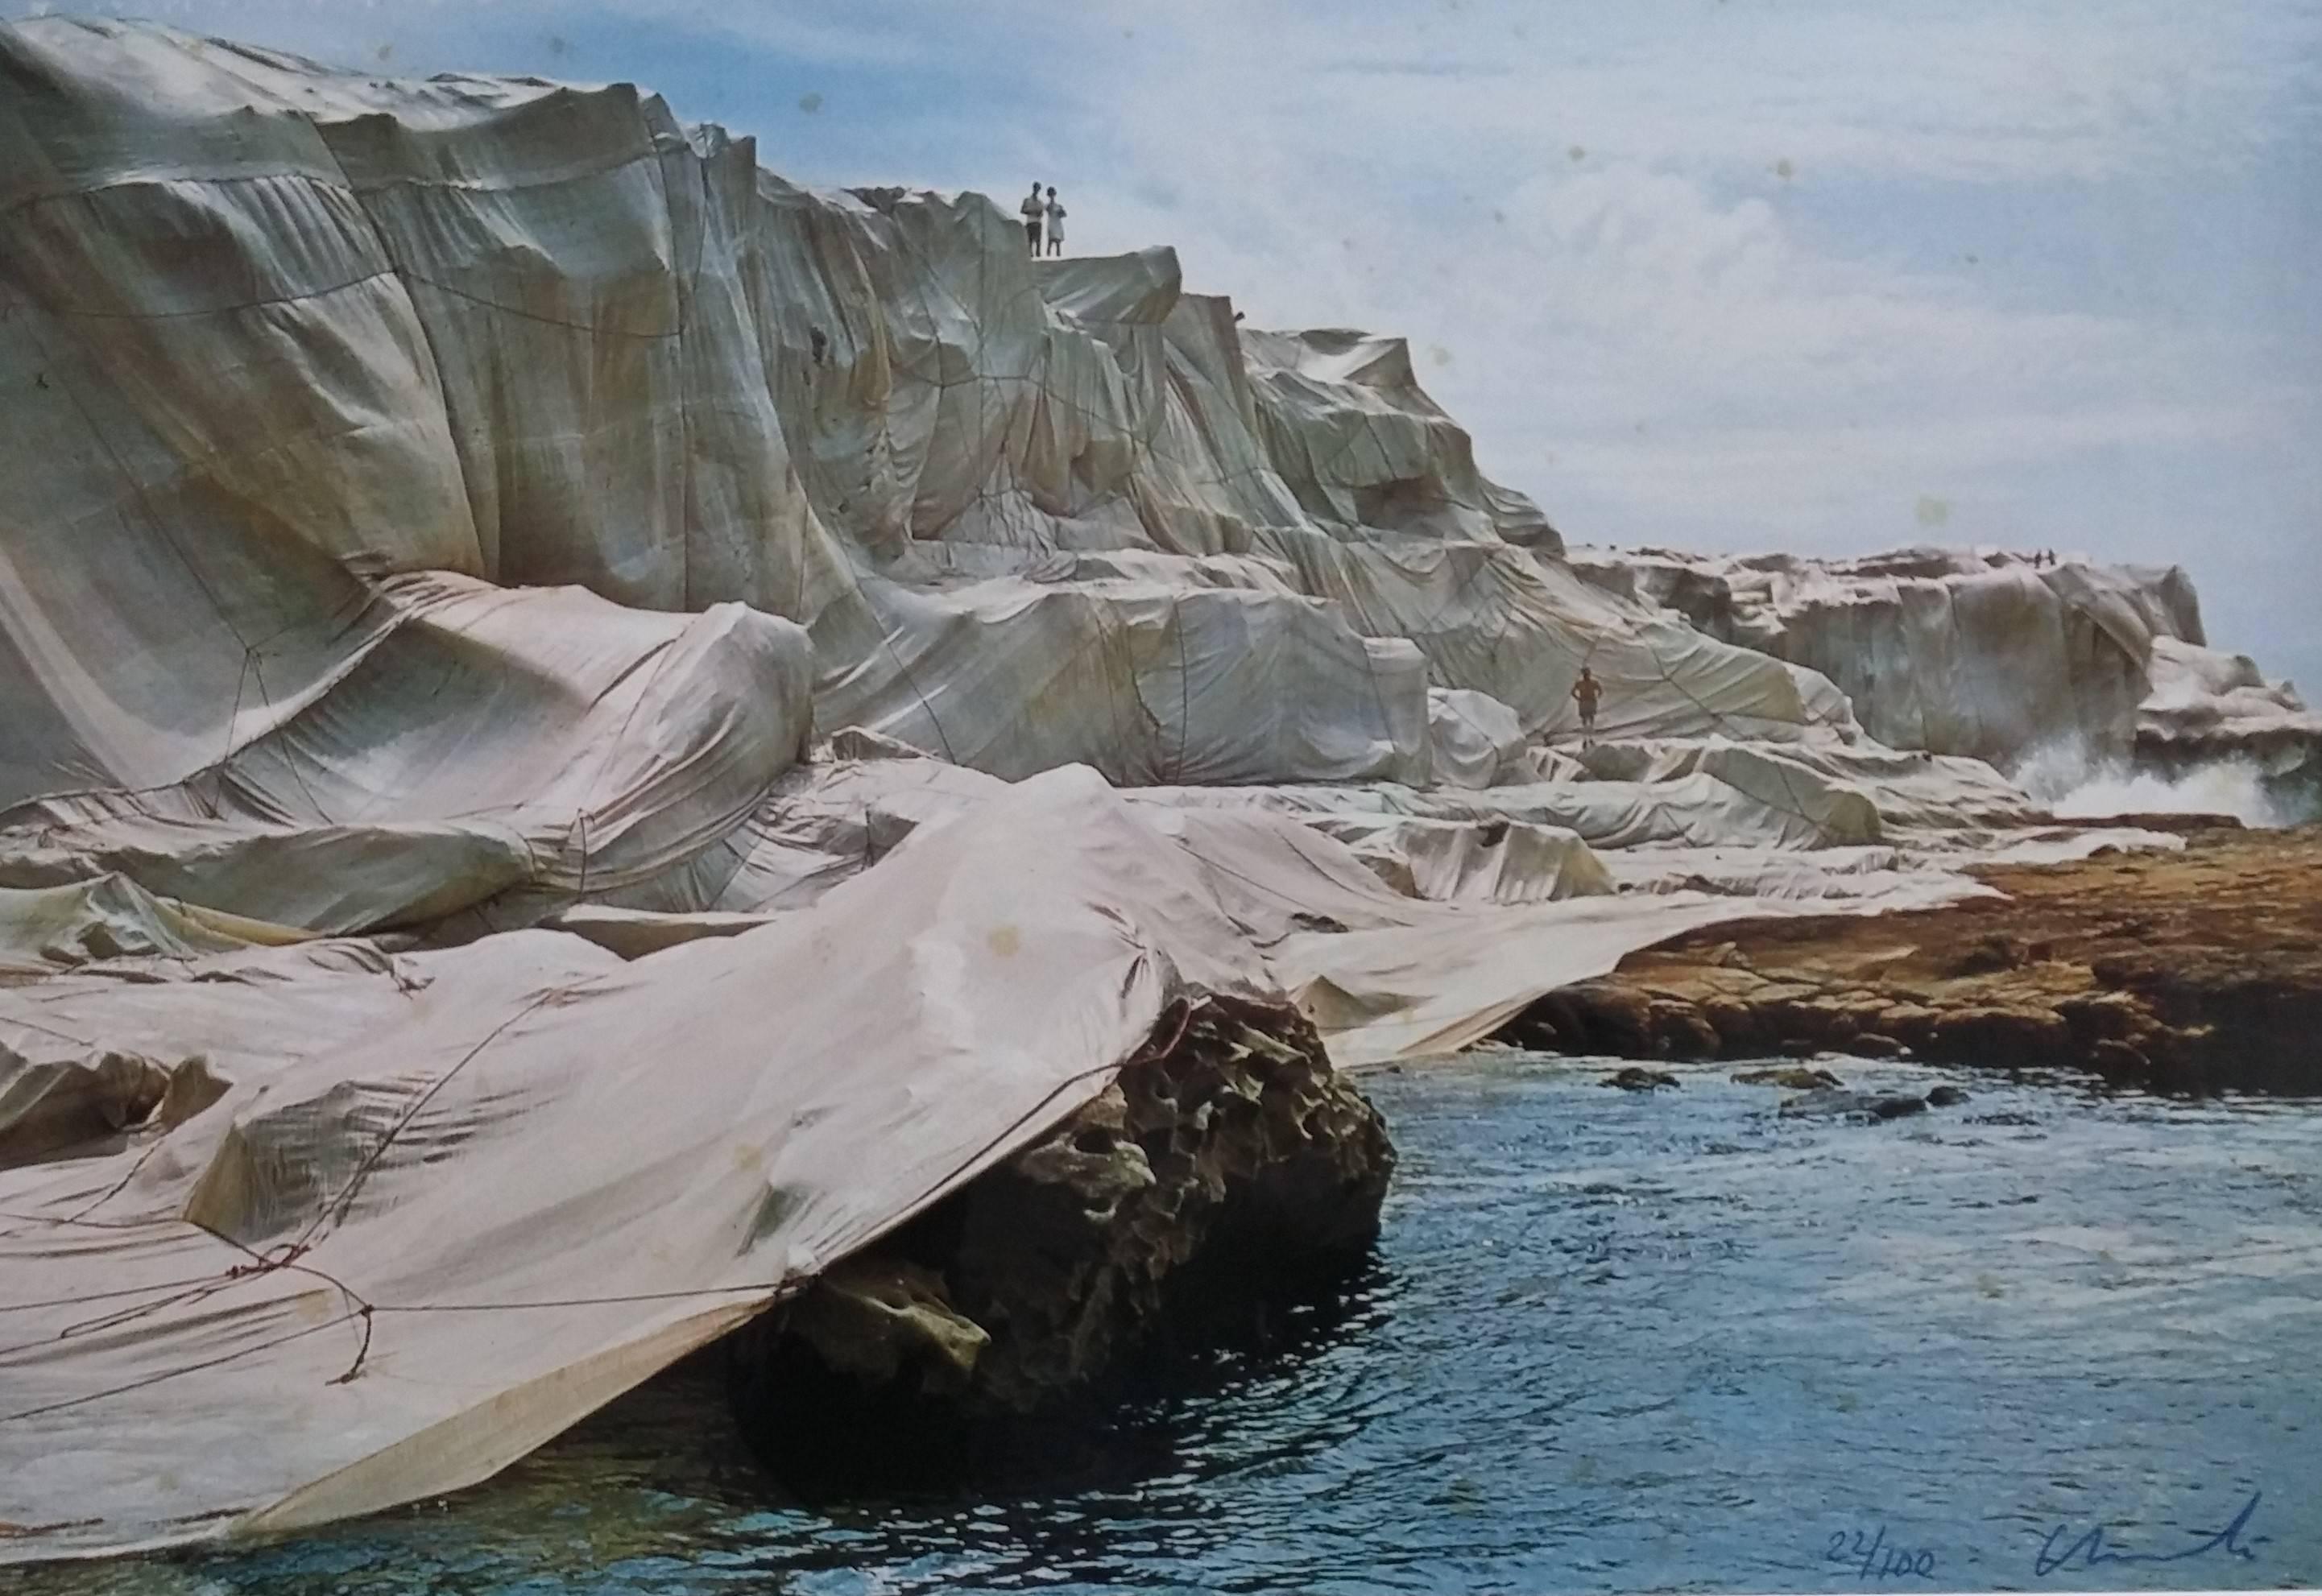 Unknown Landscape Photograph - Wrapped Coast in Australia, 1990